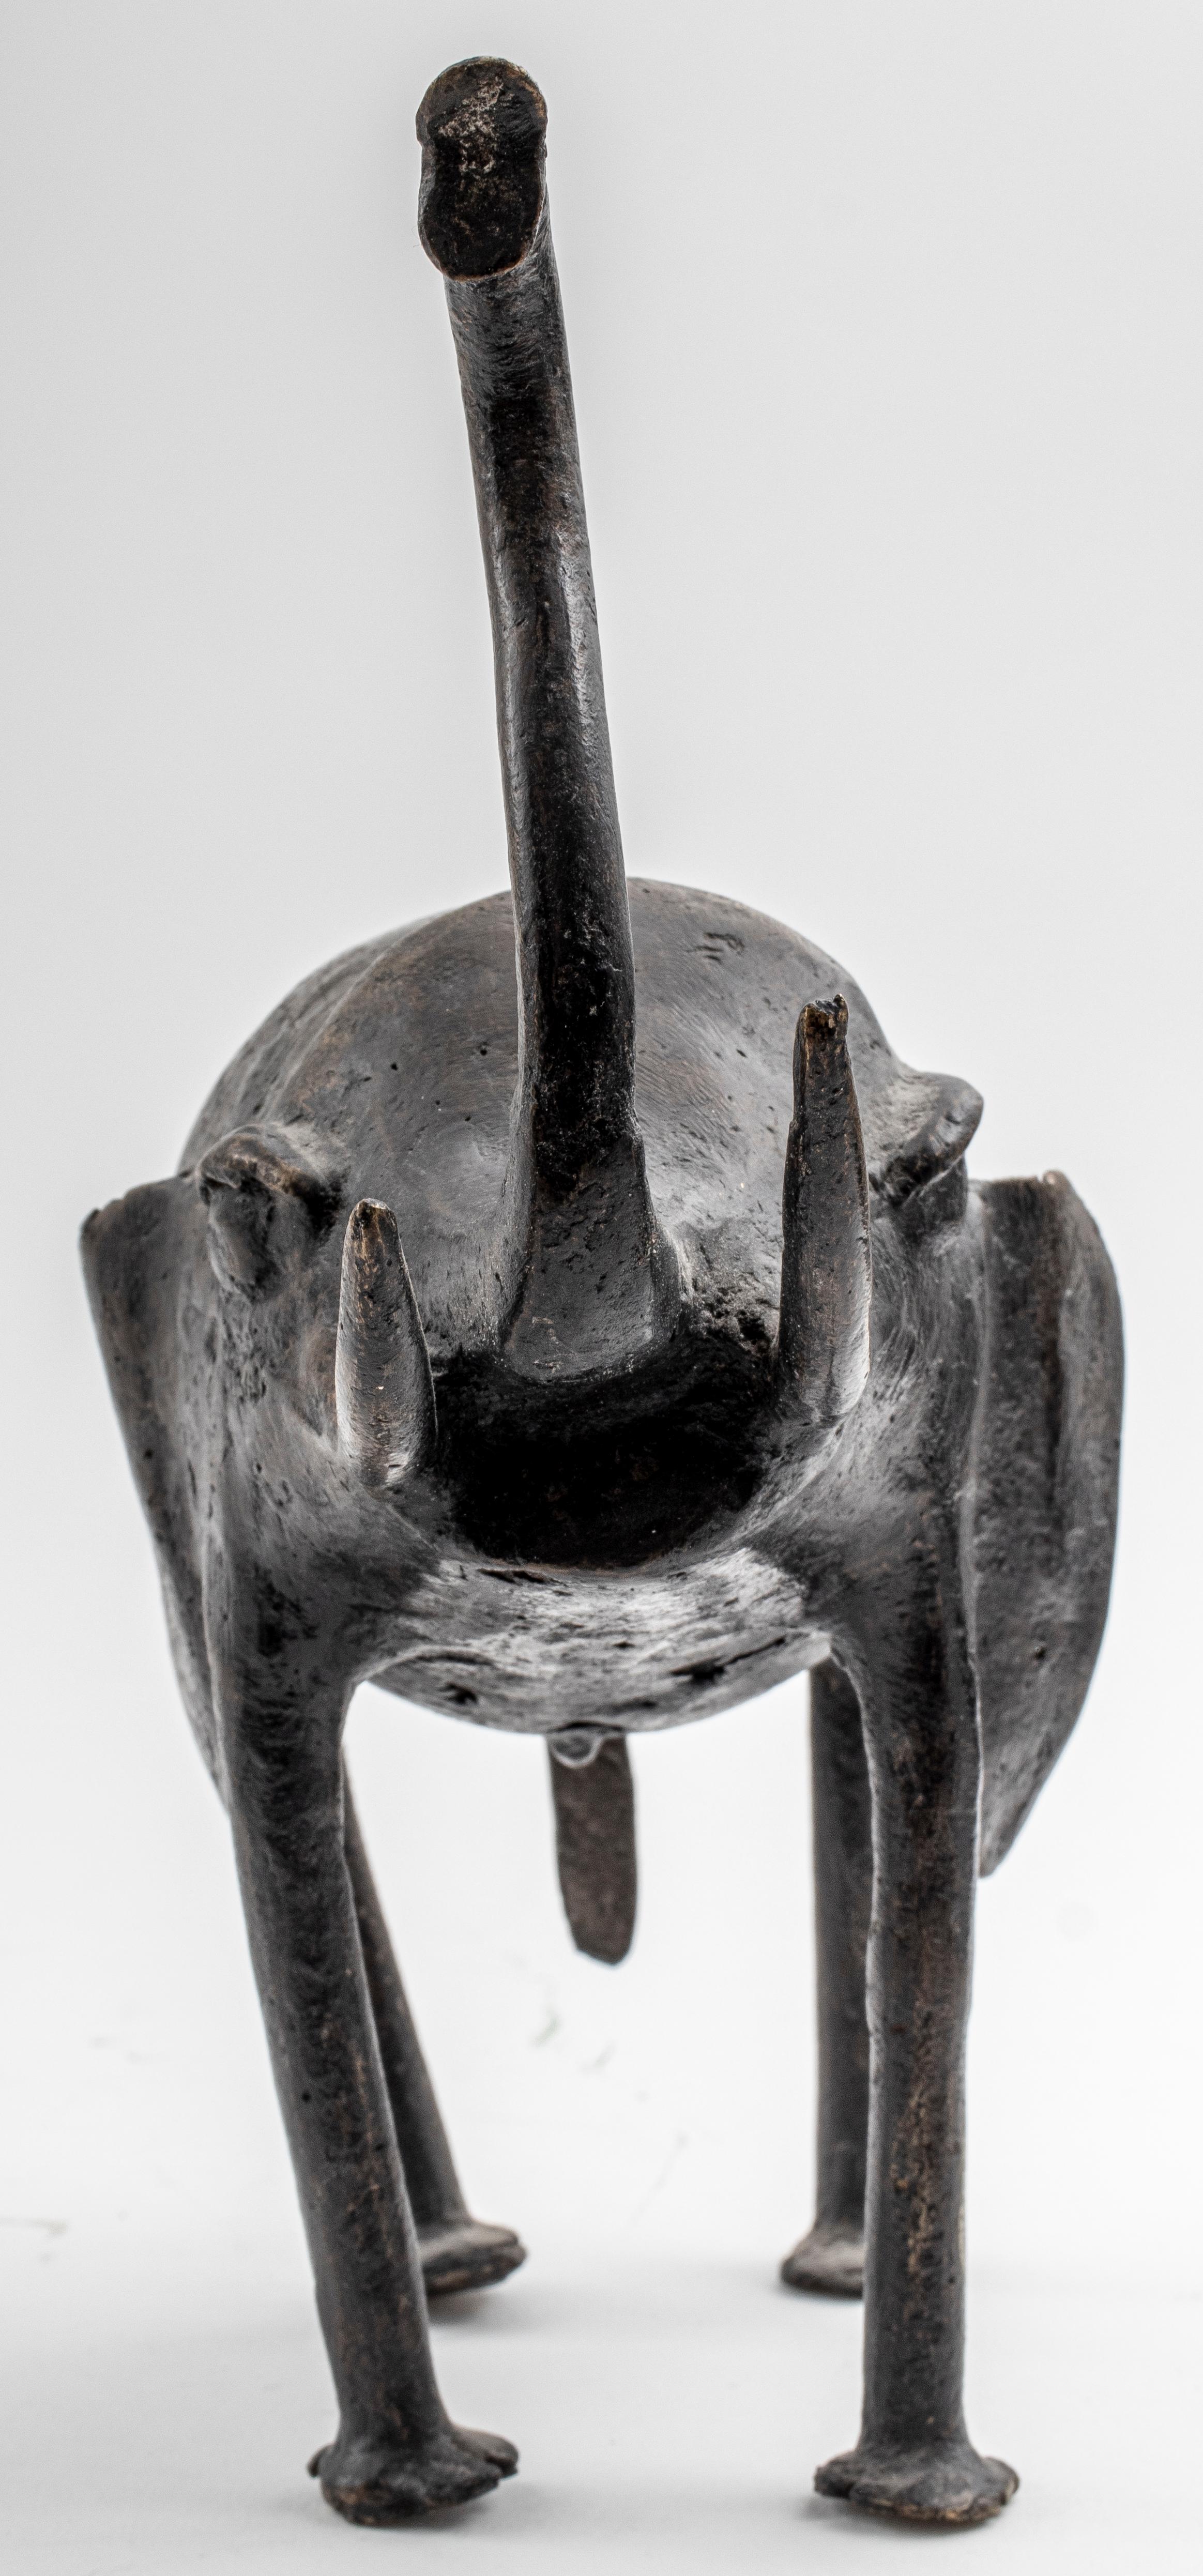 Bronze stylized elephant sculpture, unmarked. 

Measurements: 8.75